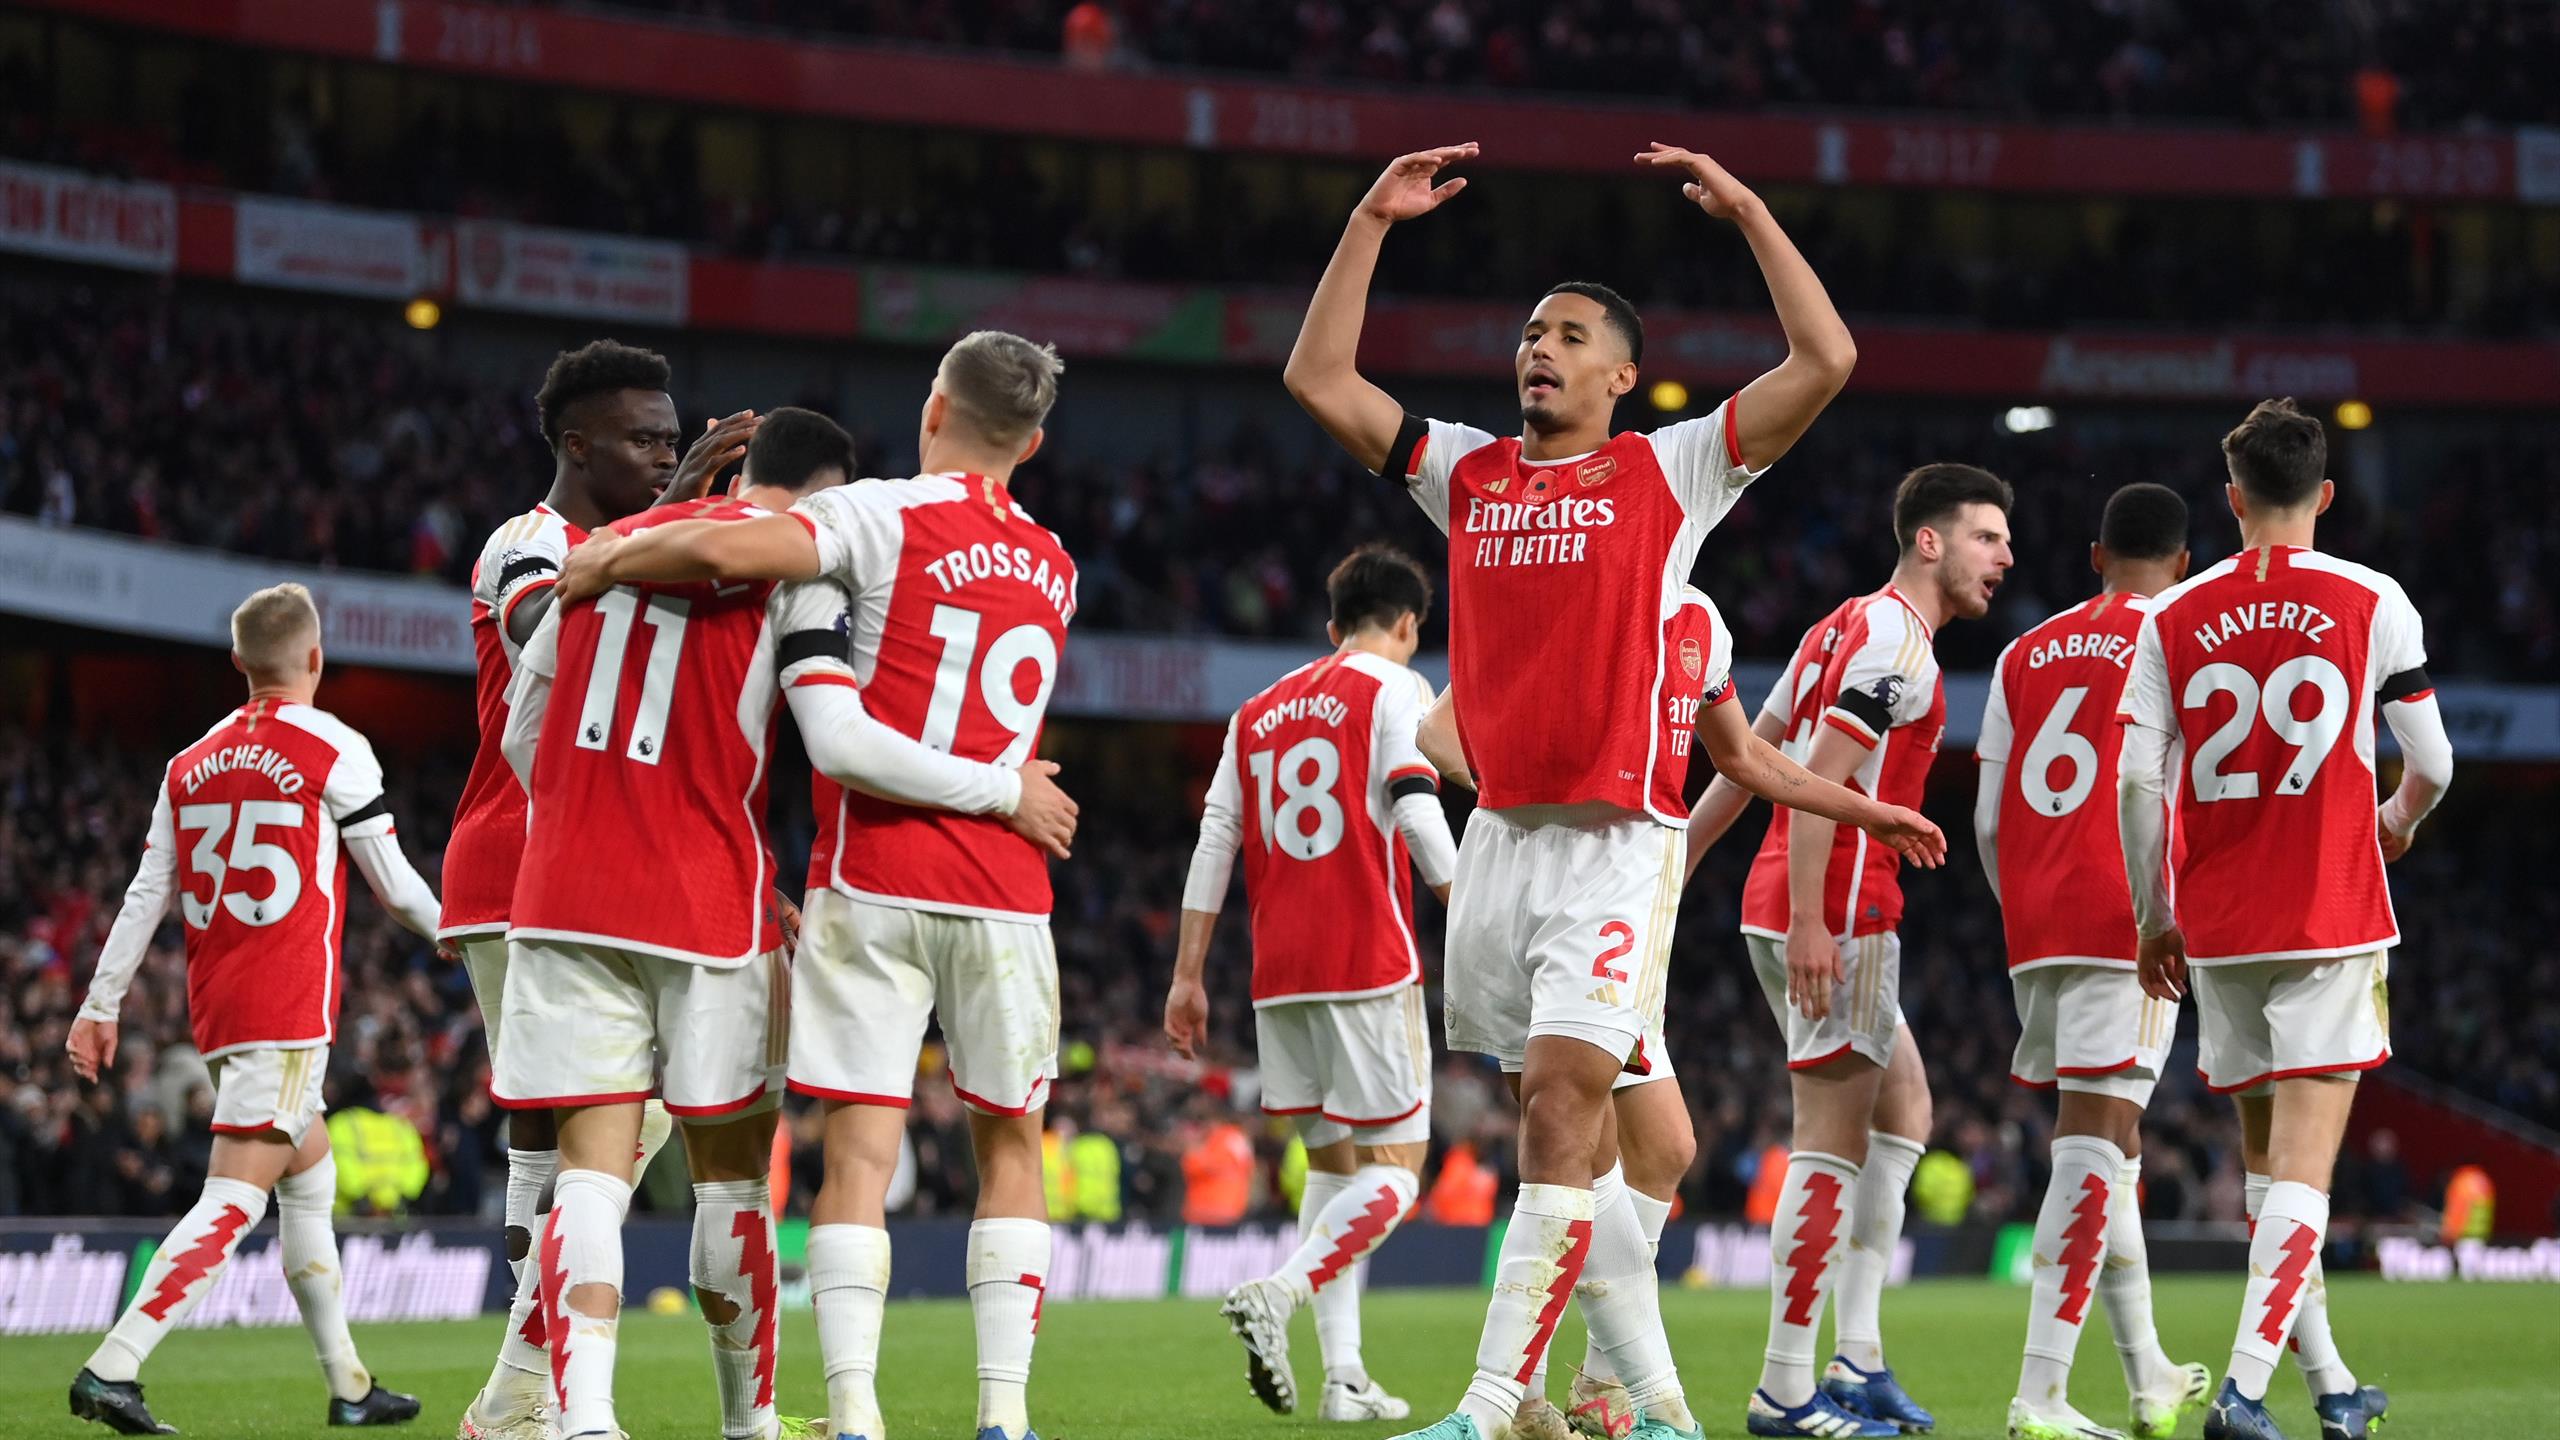 "It's tough" -- Ian Wright on Arsenal's title Hopes